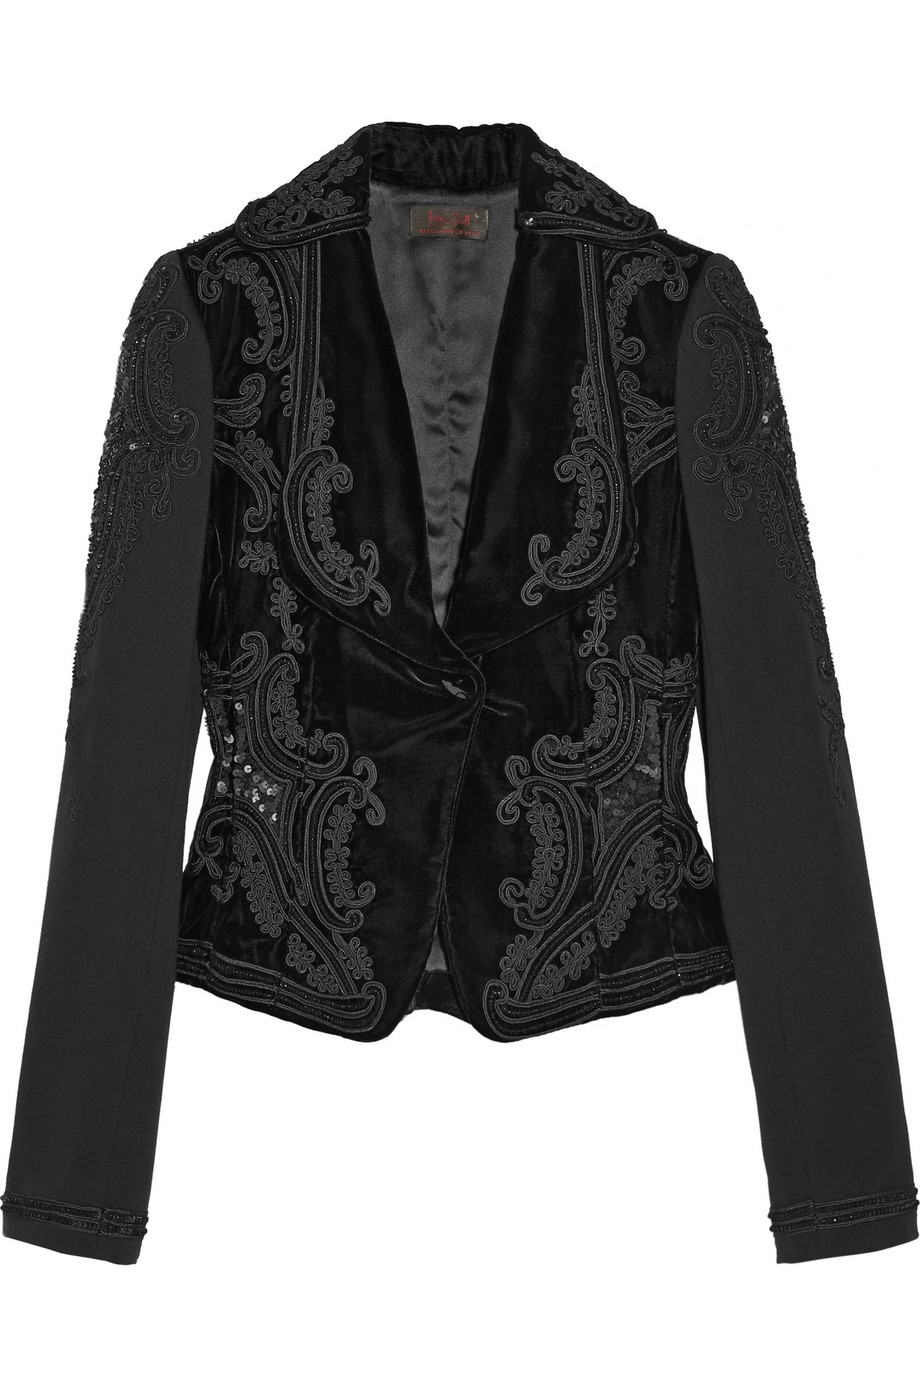 Lyst - L'Wren Scott Embellished Jersey Sleeved Velvet Jacket in Black